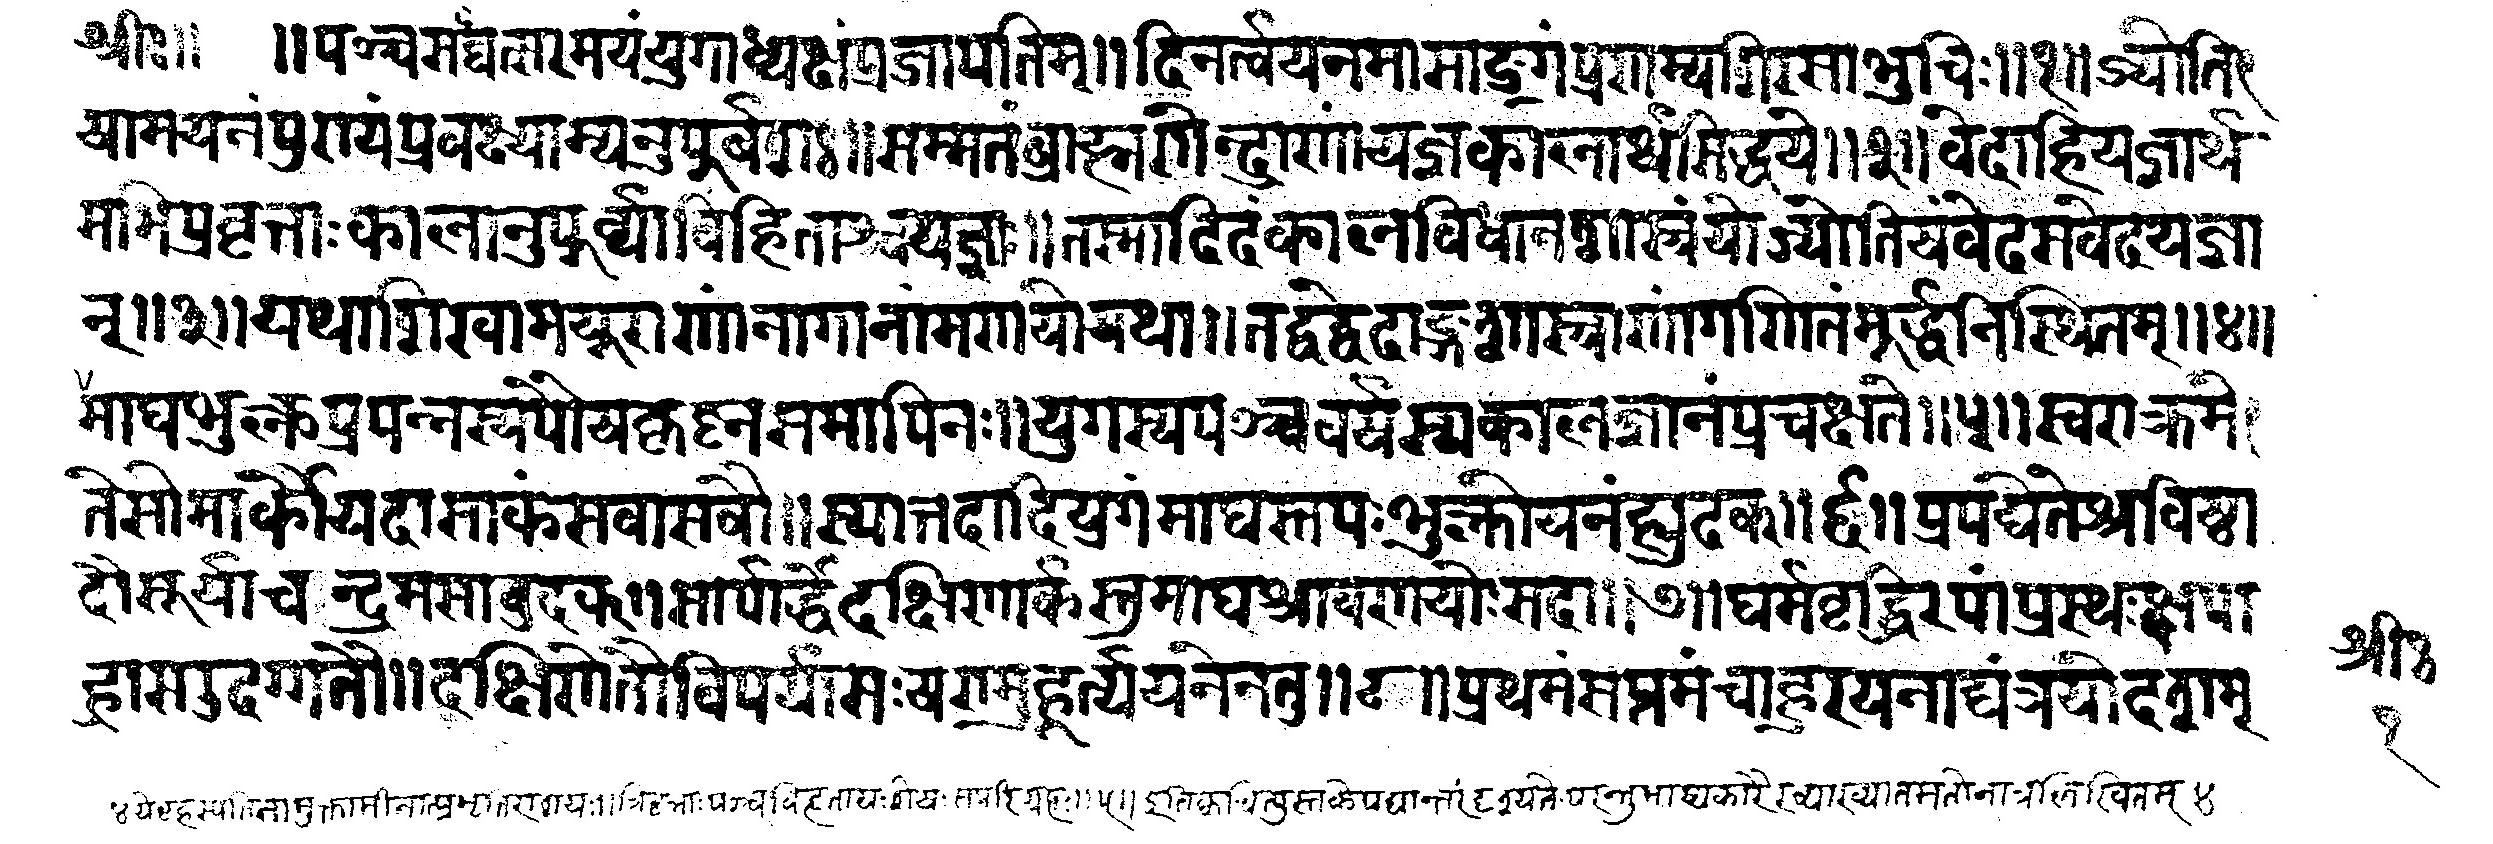 Vedic Chronology Vedanga Jyotisha manuscript